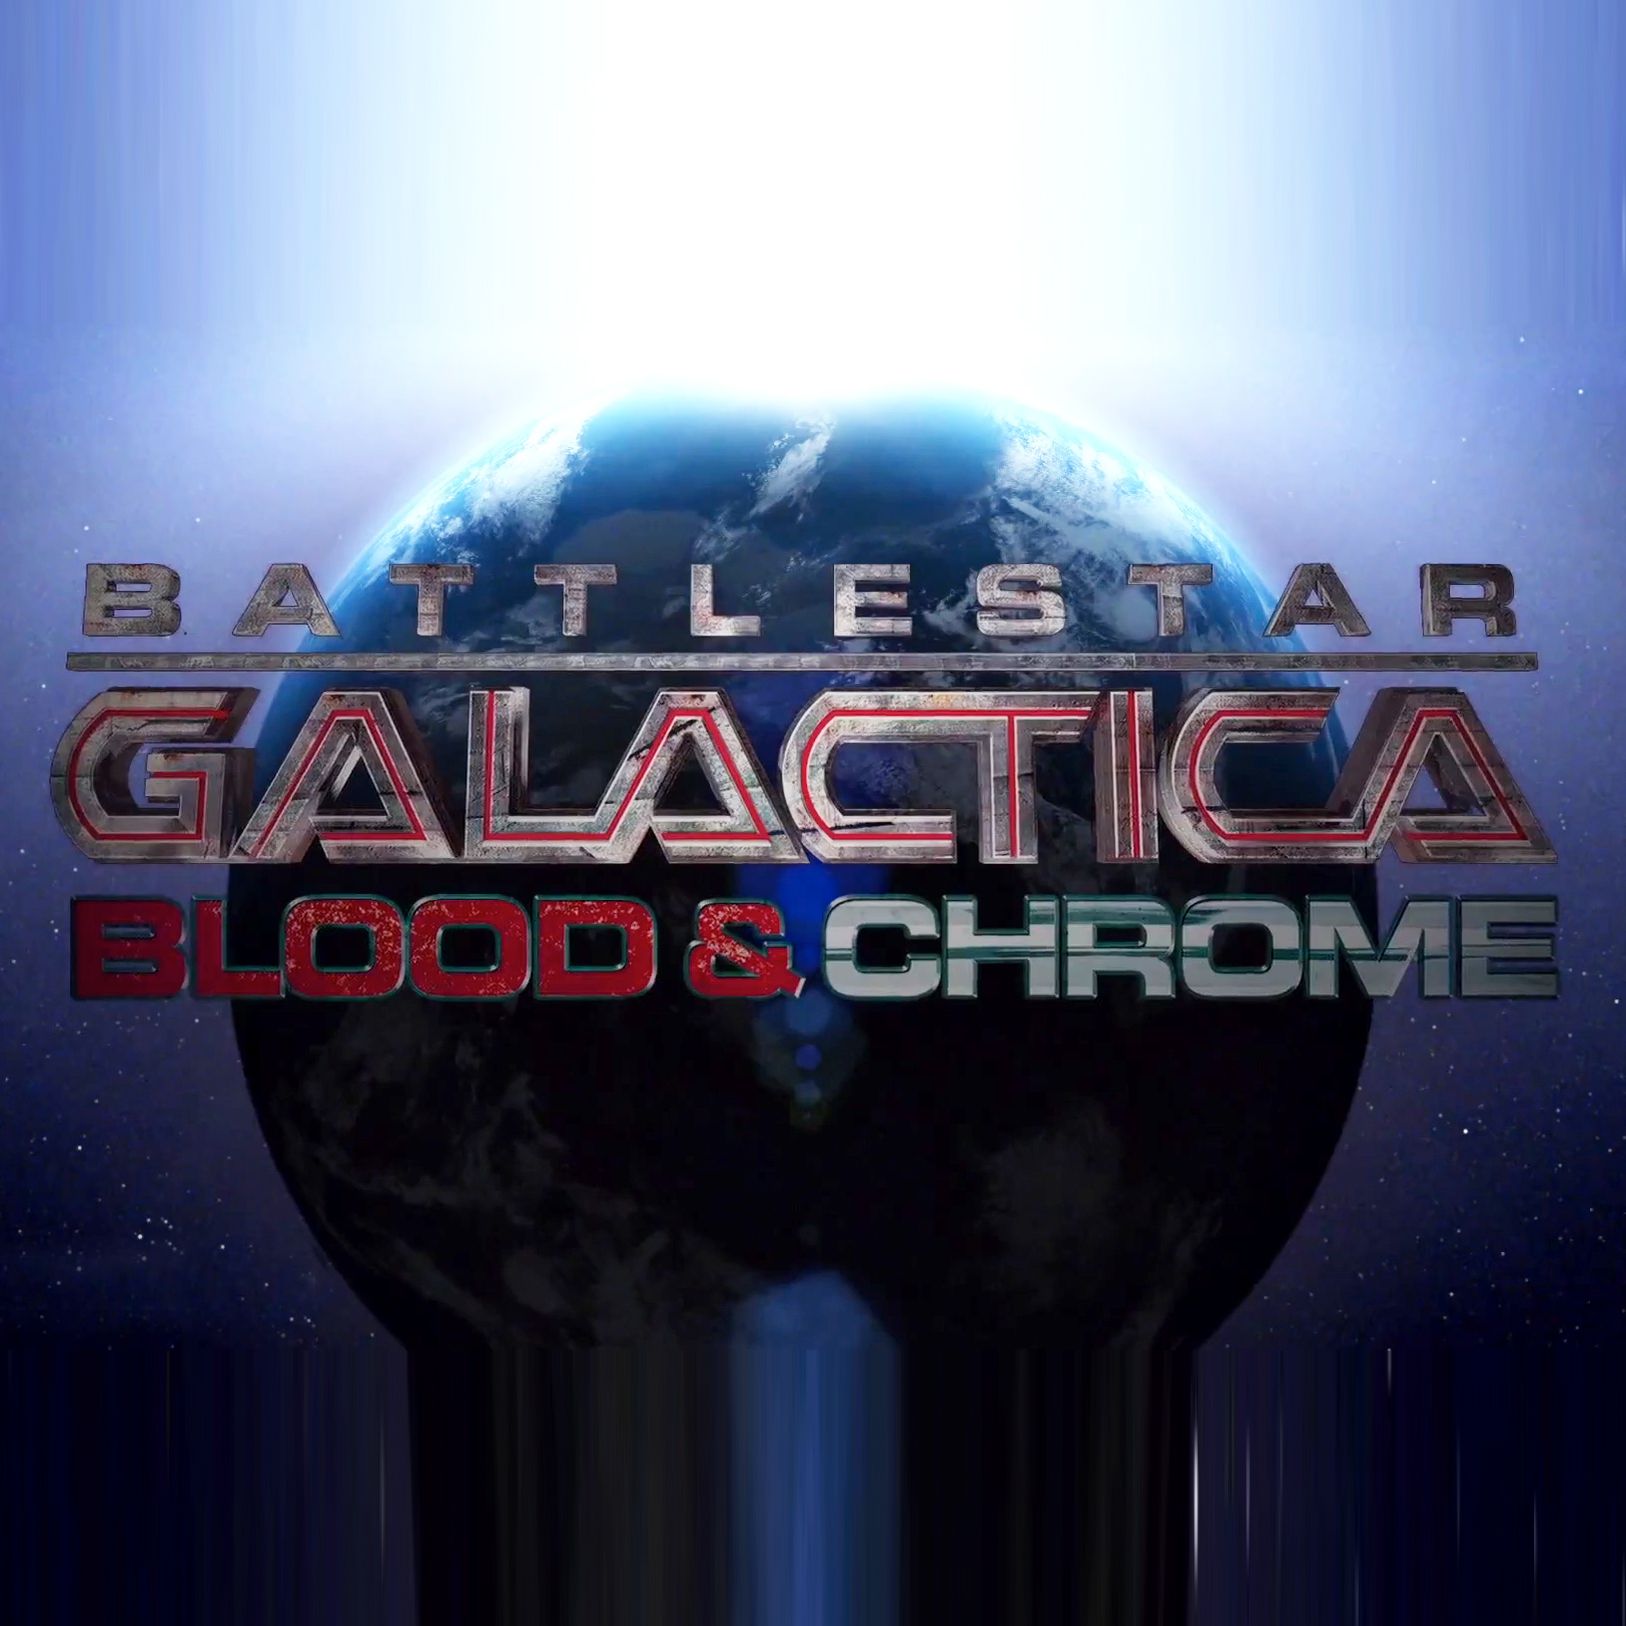 battlestar galactica: blood and chrome